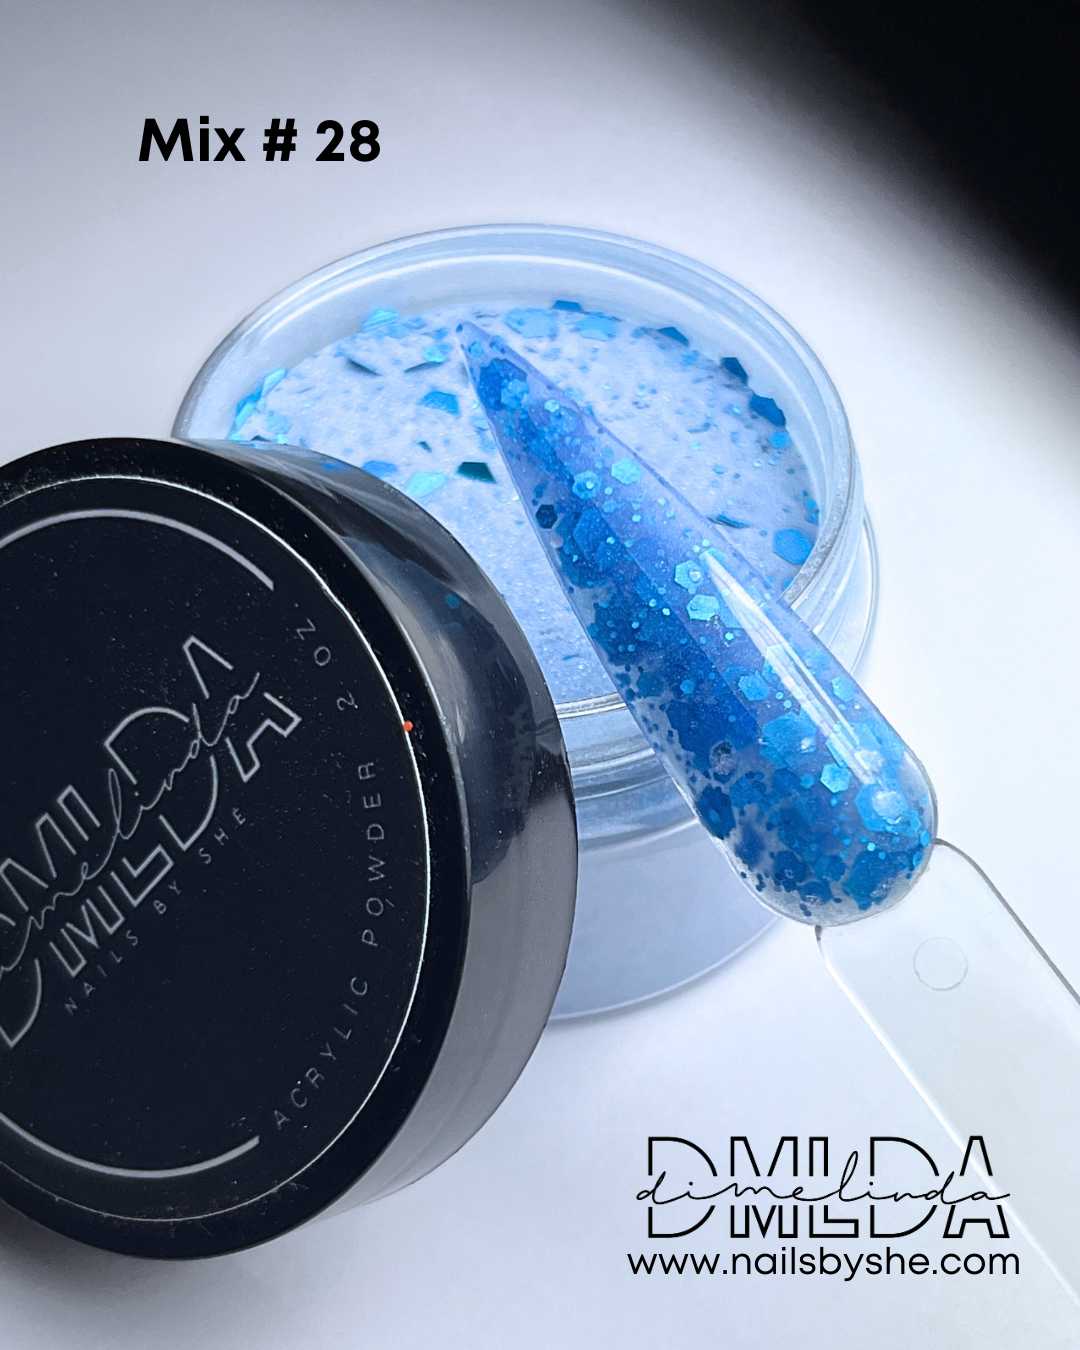 Mix # 28